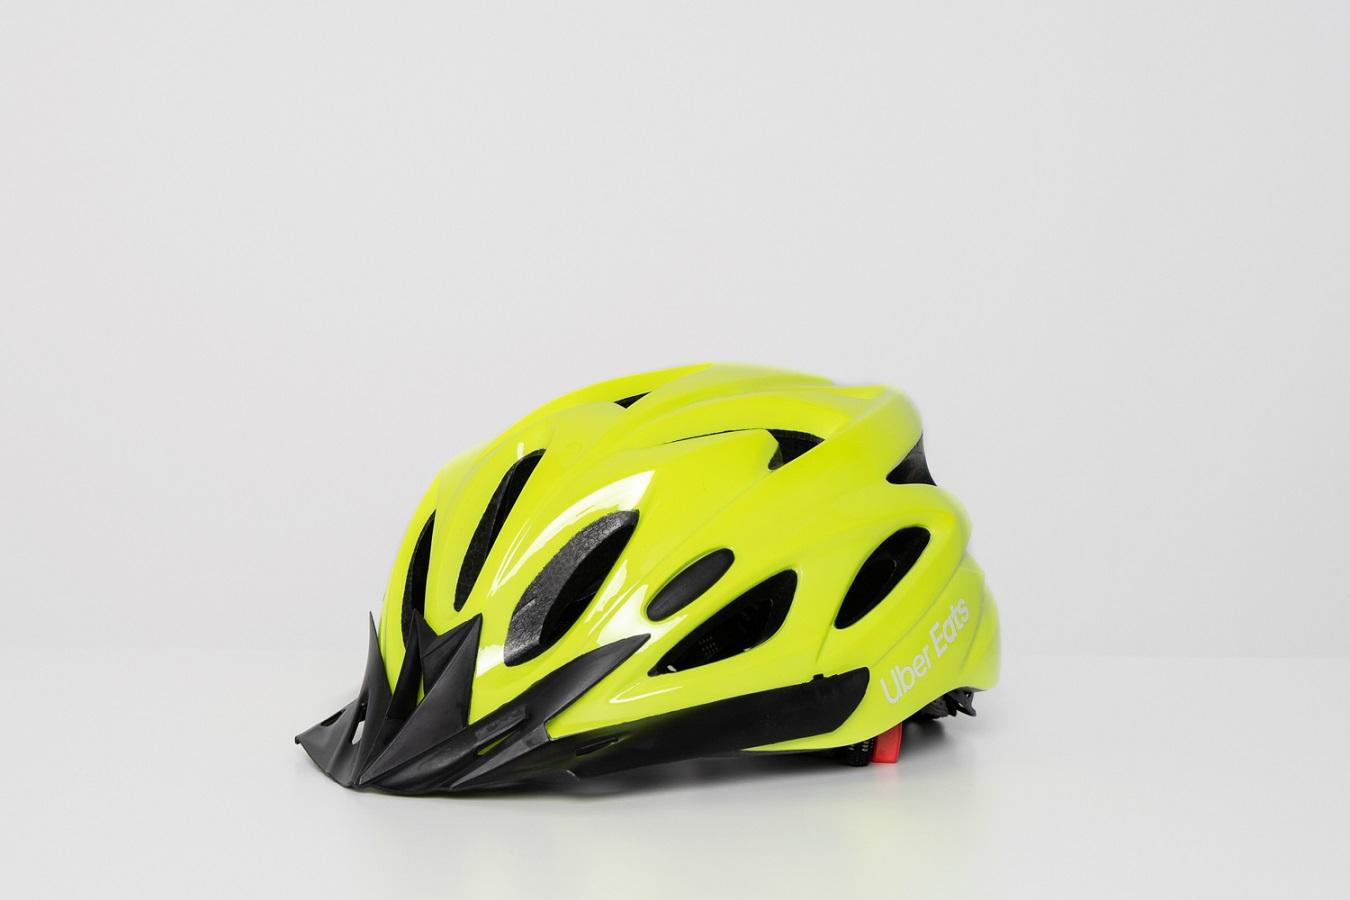 Mochila Cúbica + Kit de segurança para bicicletas + Capacete de bicicleta